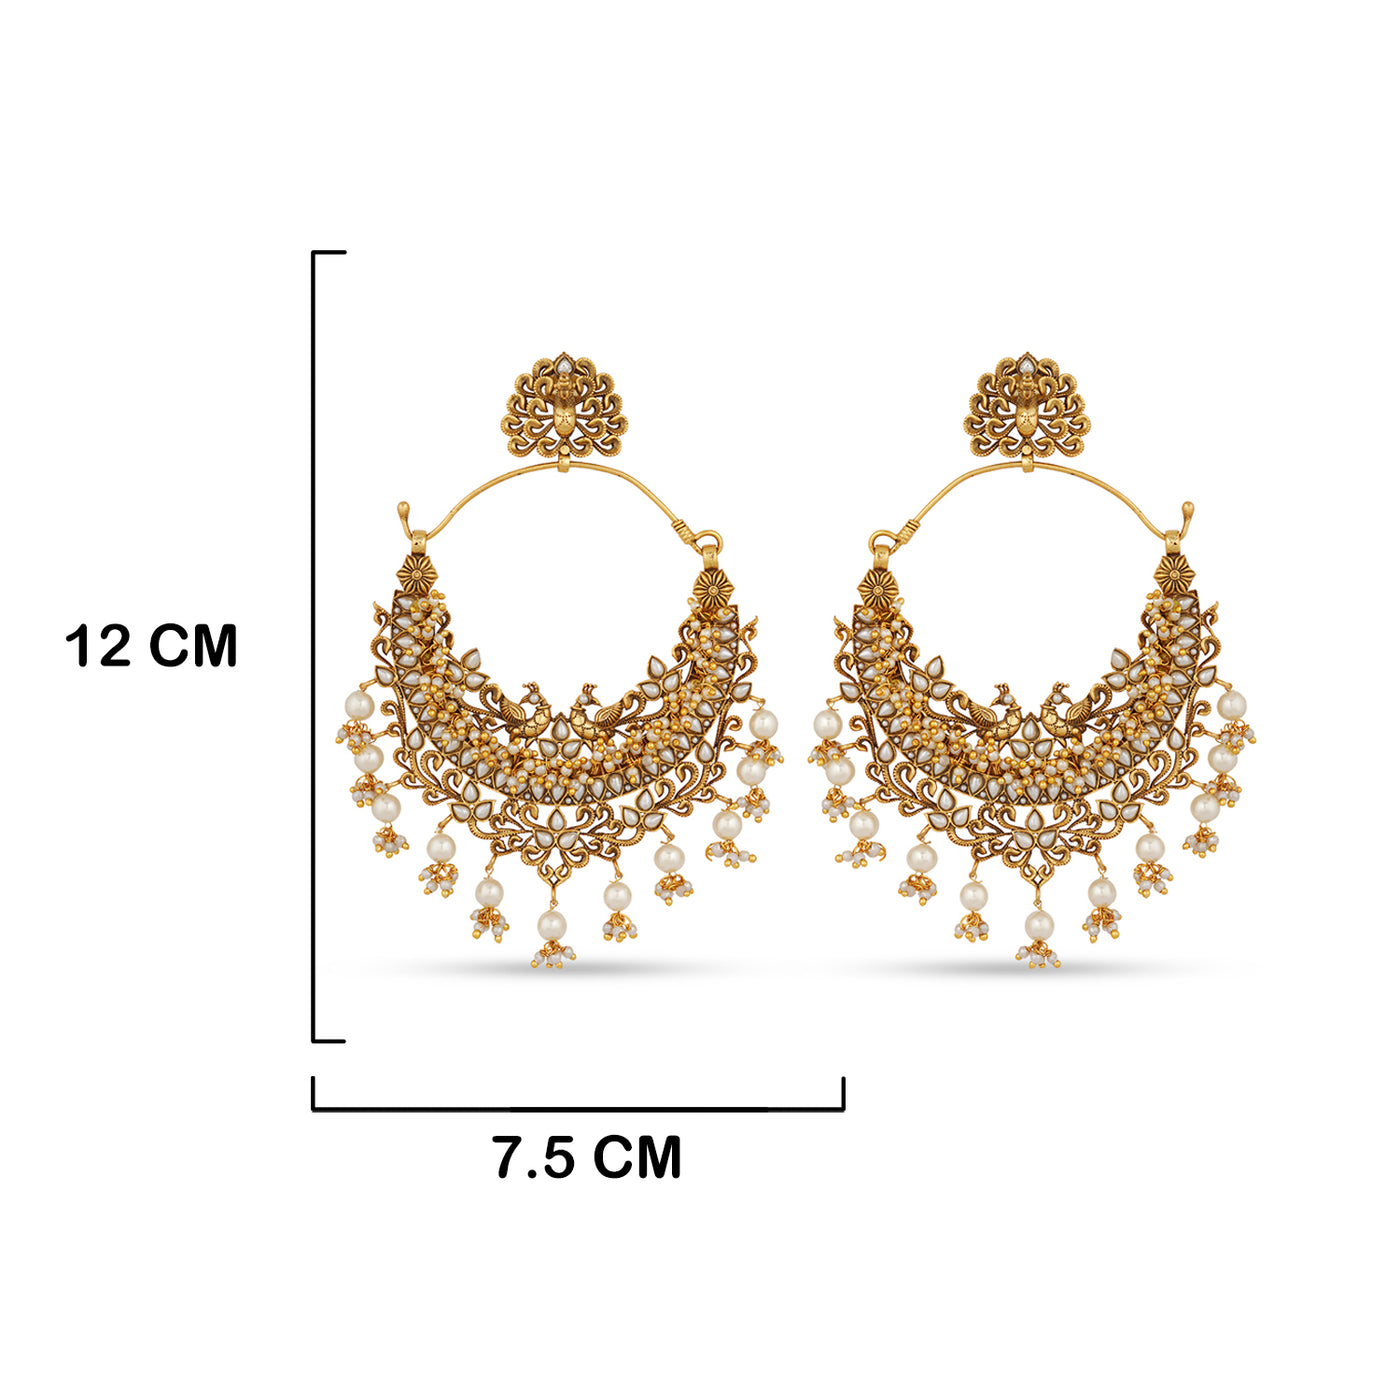 Pearled Kundan Chanbaali Earrings with measurements in cm. 12cm by 7.5cm.